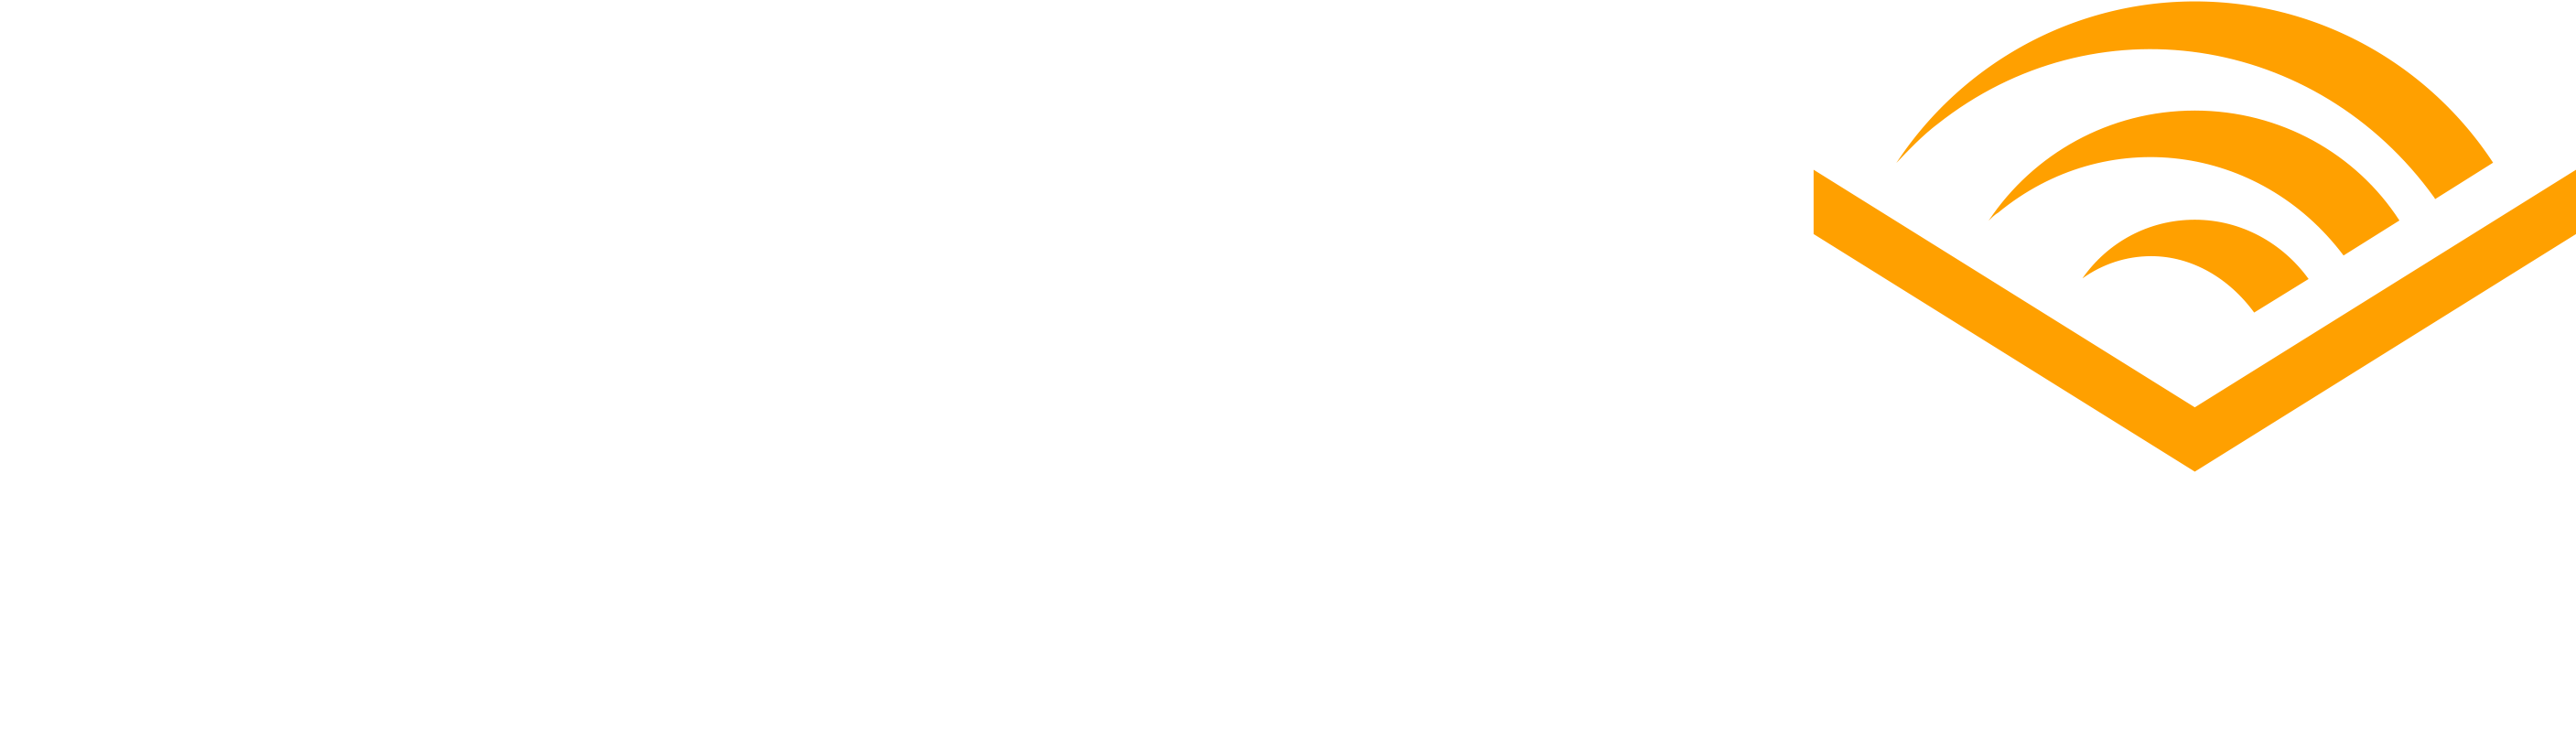 Audible_logo_1